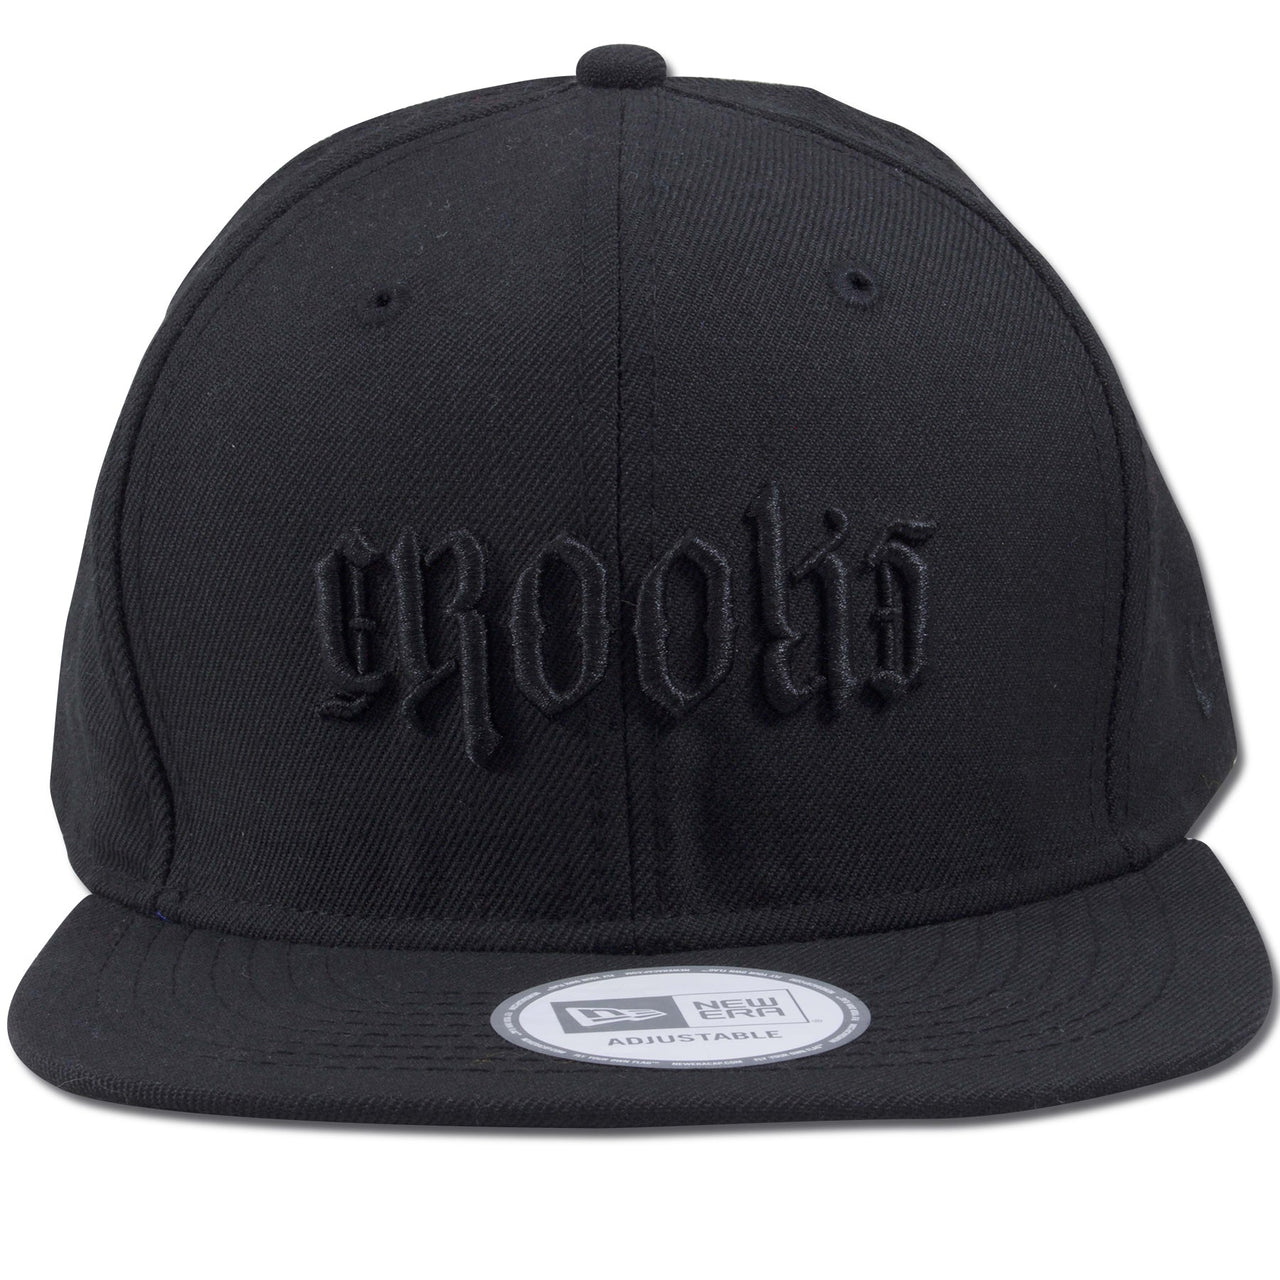 Crooks and Castles x New Era Black Adjustable Strapback Hat